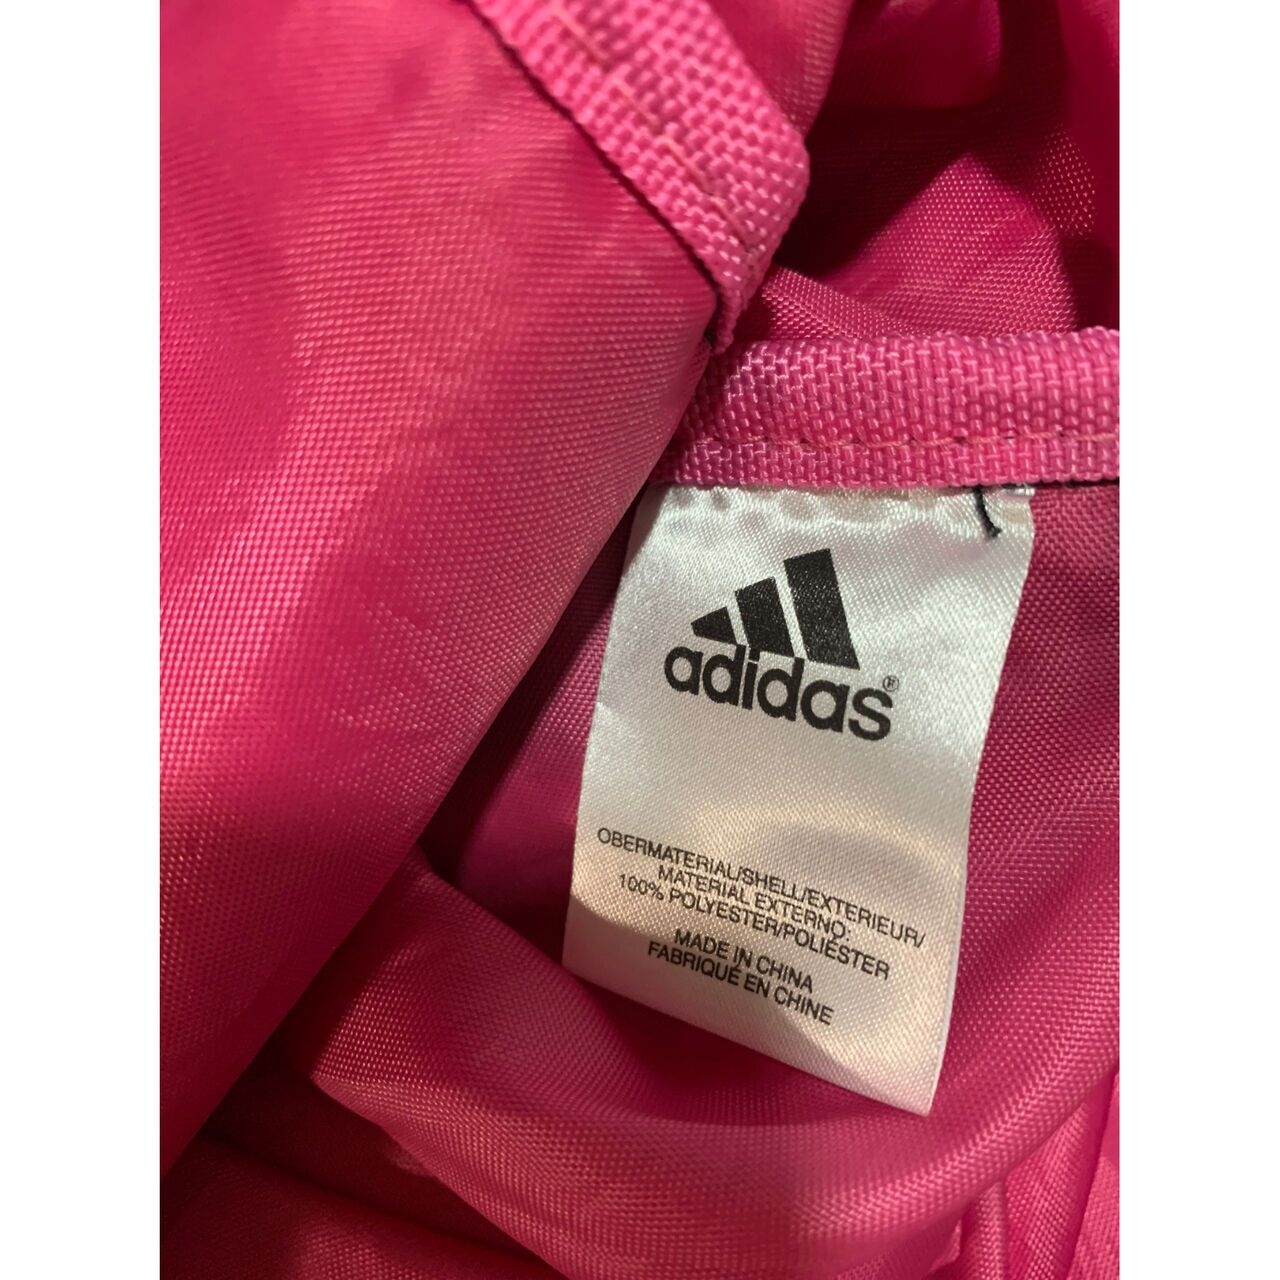 Adidas Grey & Pink Satchel